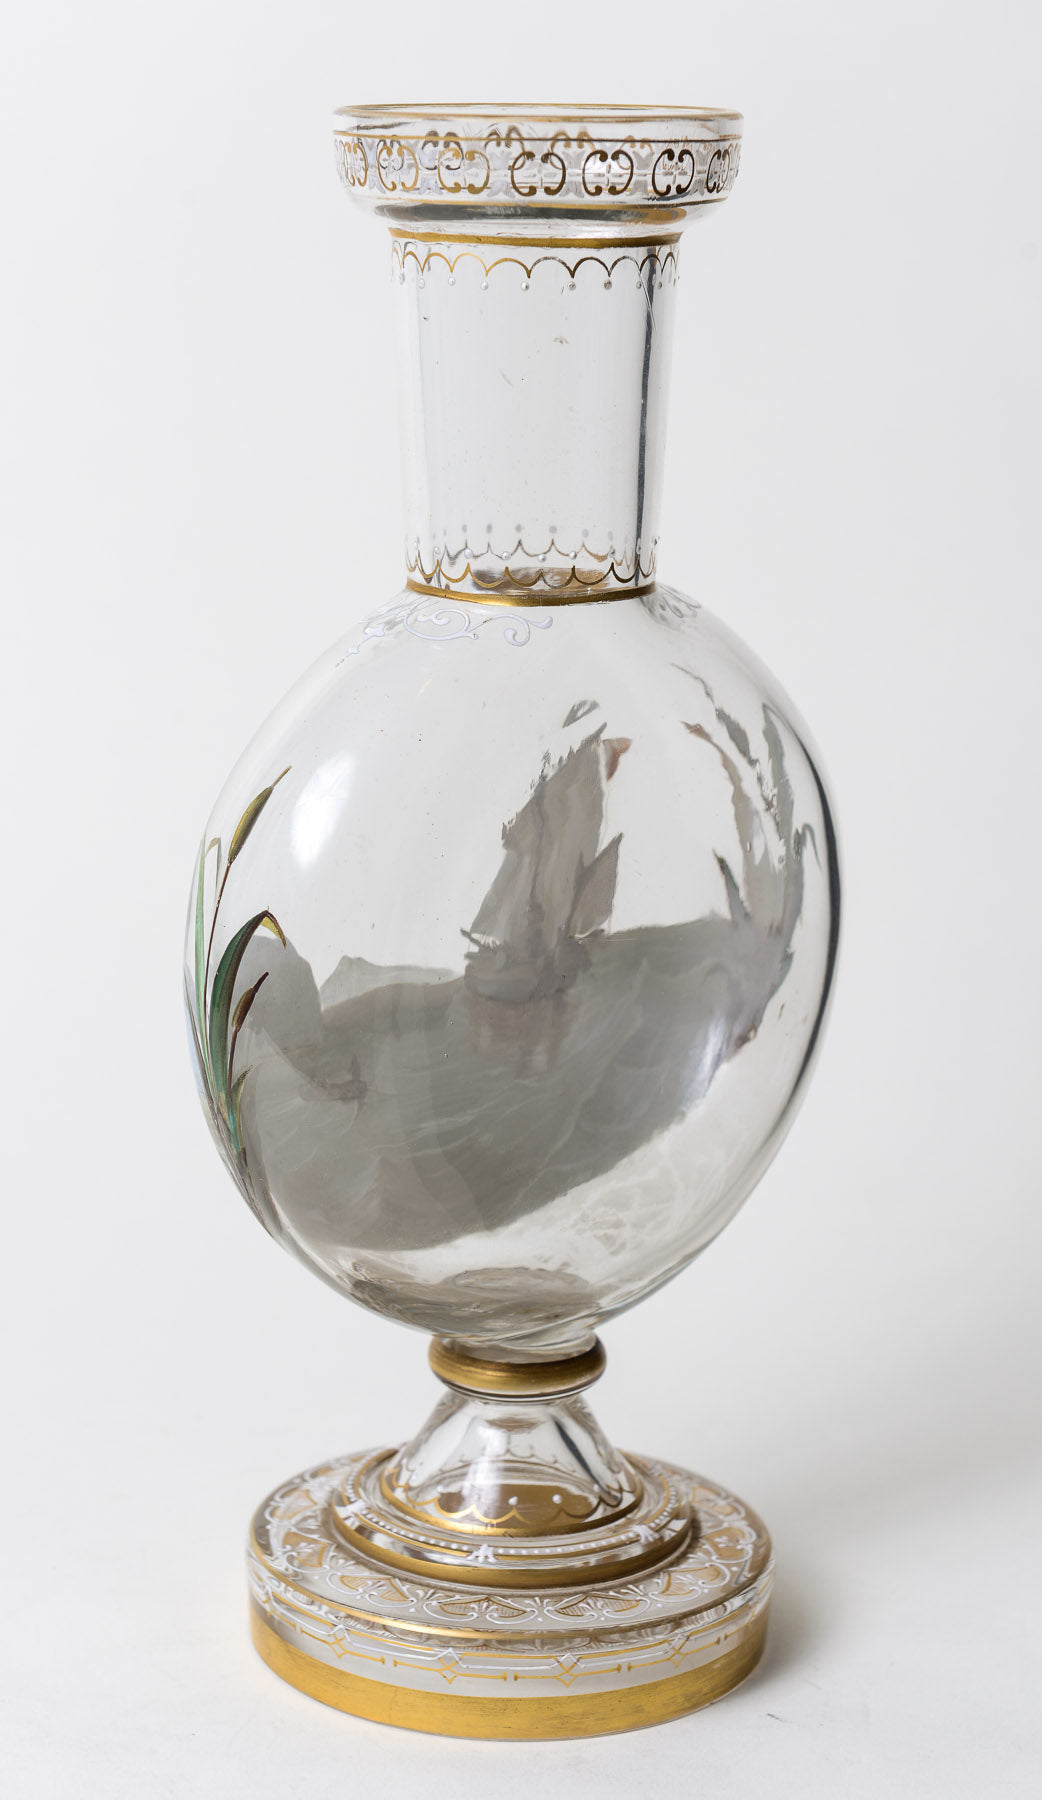 Antique Victorian Hand Painted Glass Antarctic Exploration & Sailing Ship Vase (Code 0249)